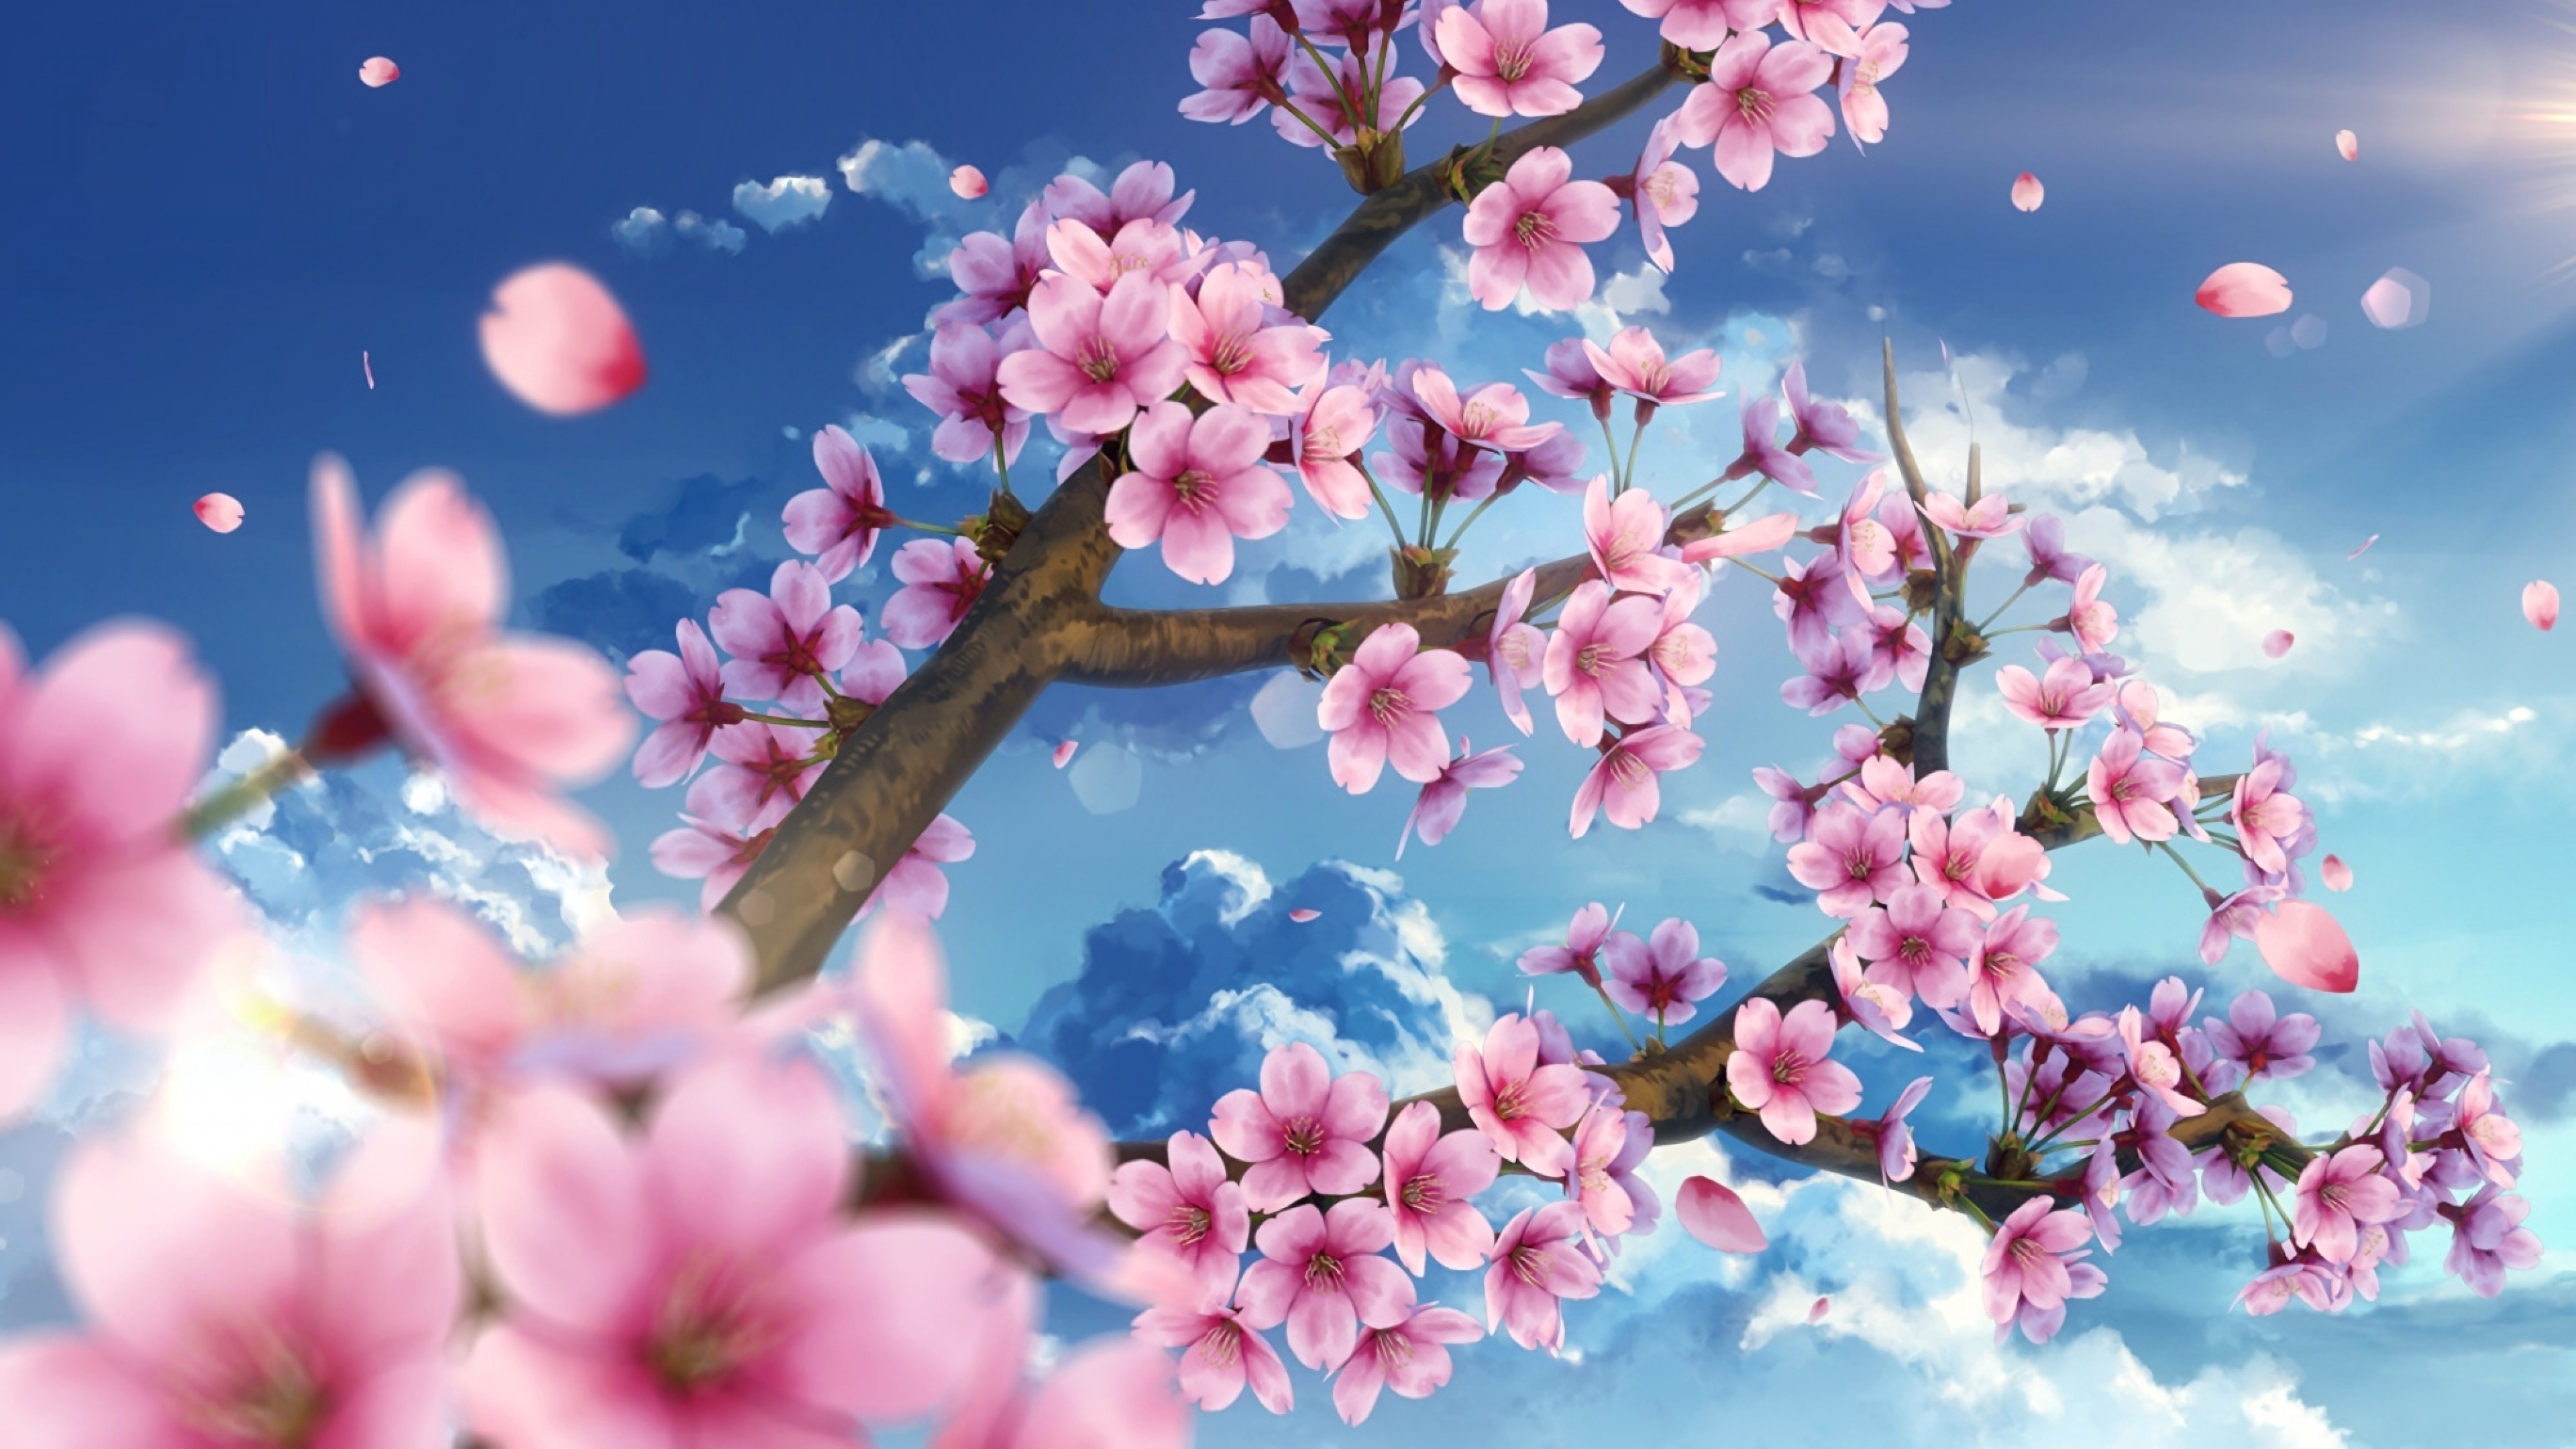 Sakura Wallpaper Flowering Tree Branch With Pink Flowers : 